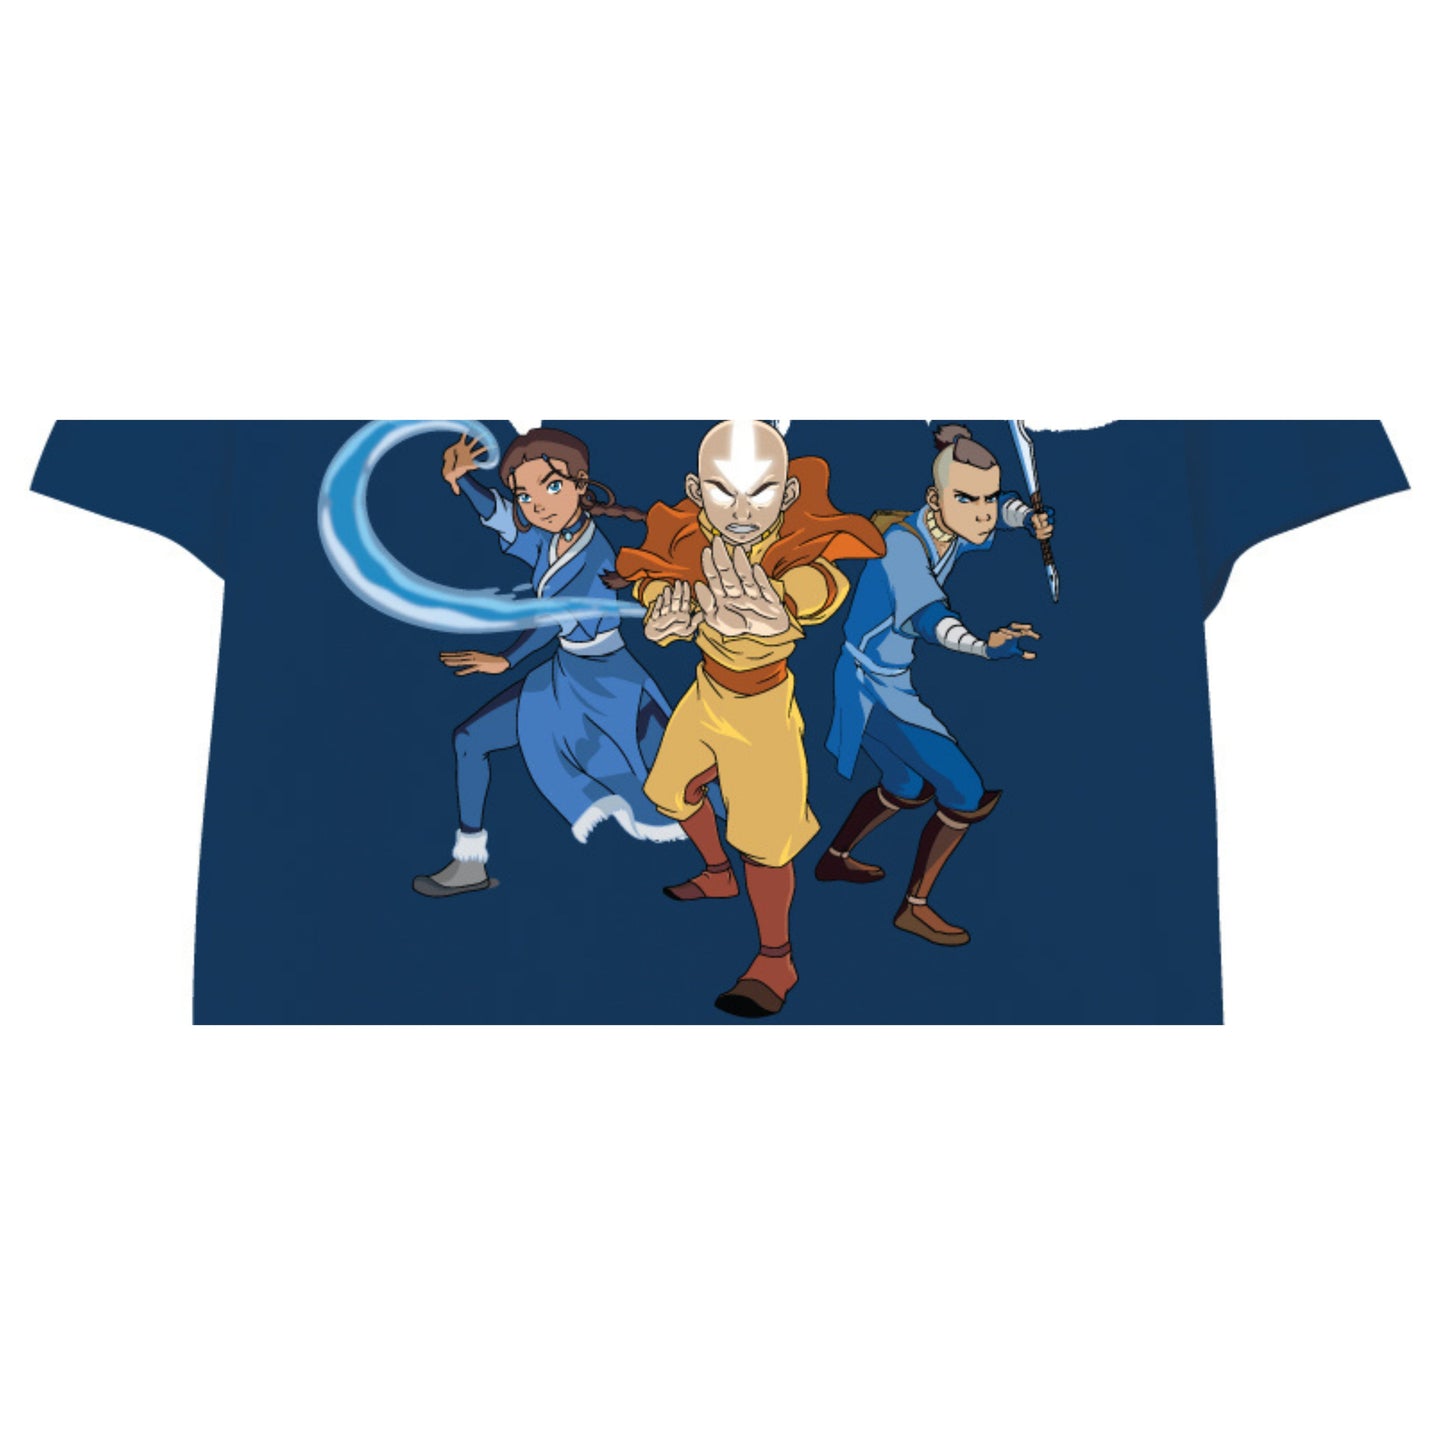 Avatar The Last Airbender Mens Short Sleeve T-Shirt - Nickelodeon